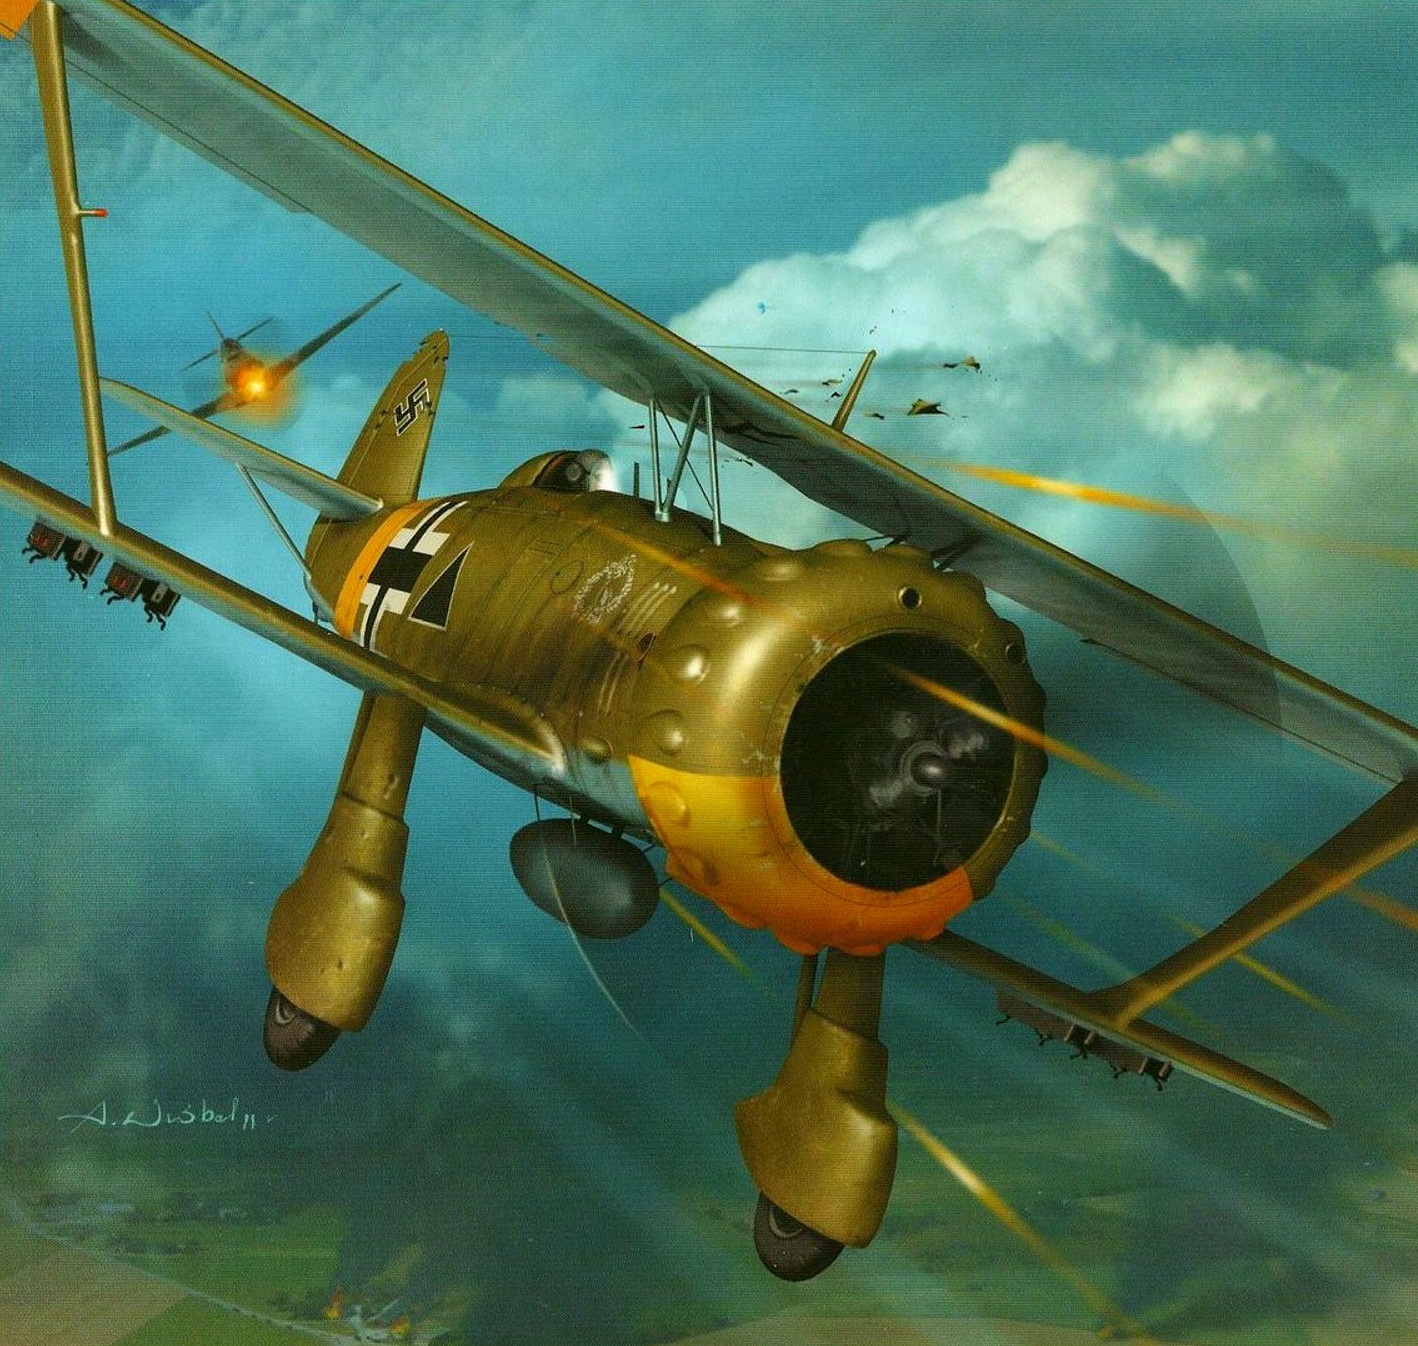 General 1418x1346 World War II biplane airplane aircraft military military aircraft war Luftwaffe Germany German aircraft